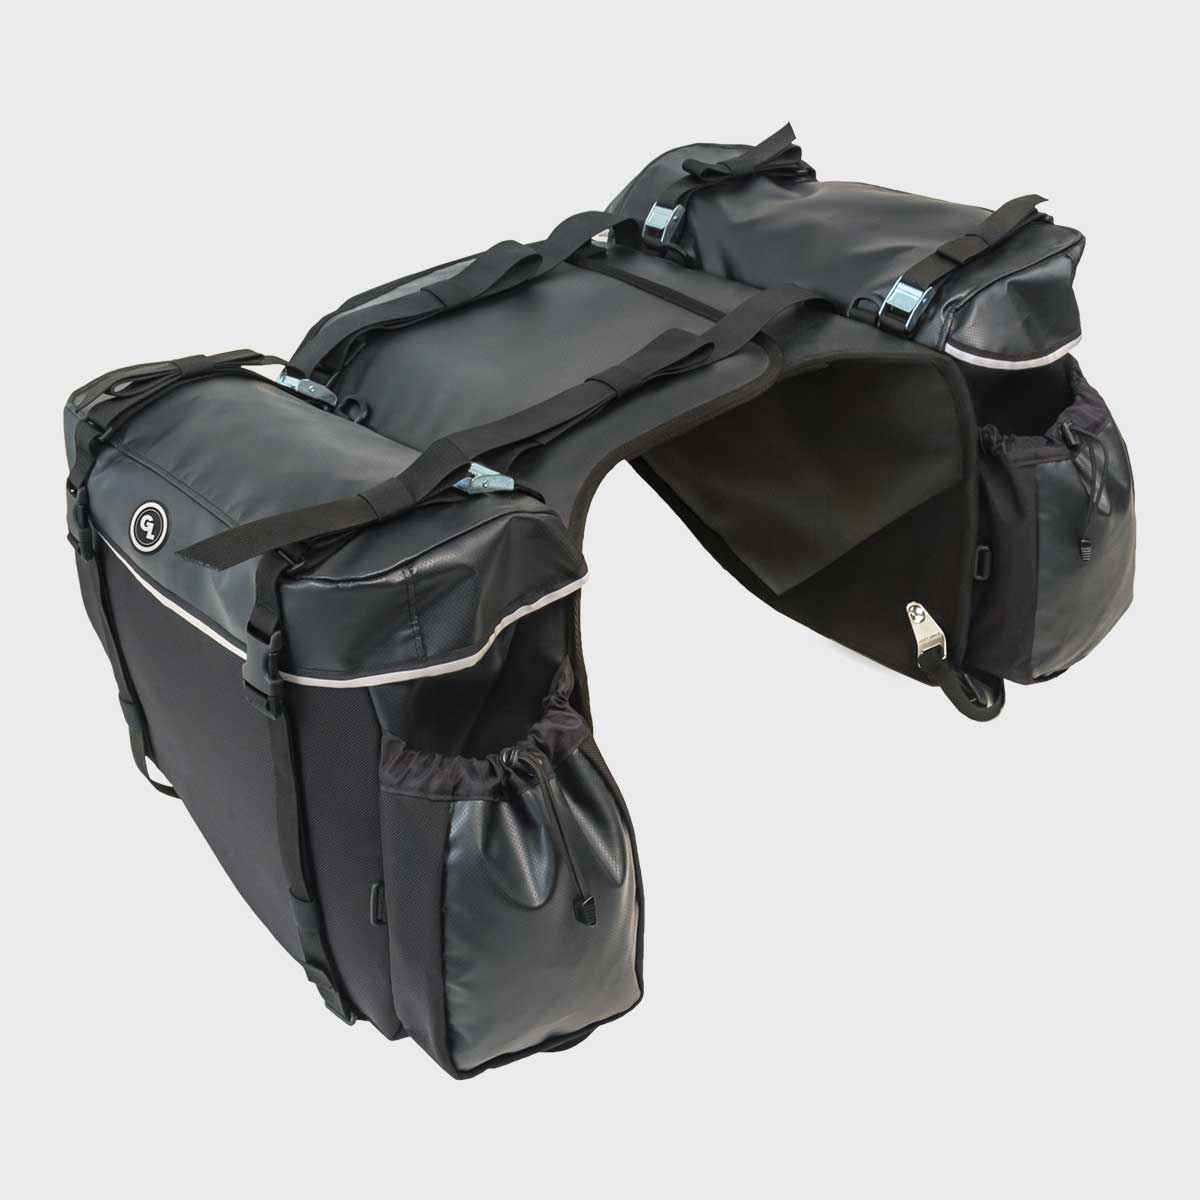 Siskiyou Panniers waterproof soft luggage for motorcycles